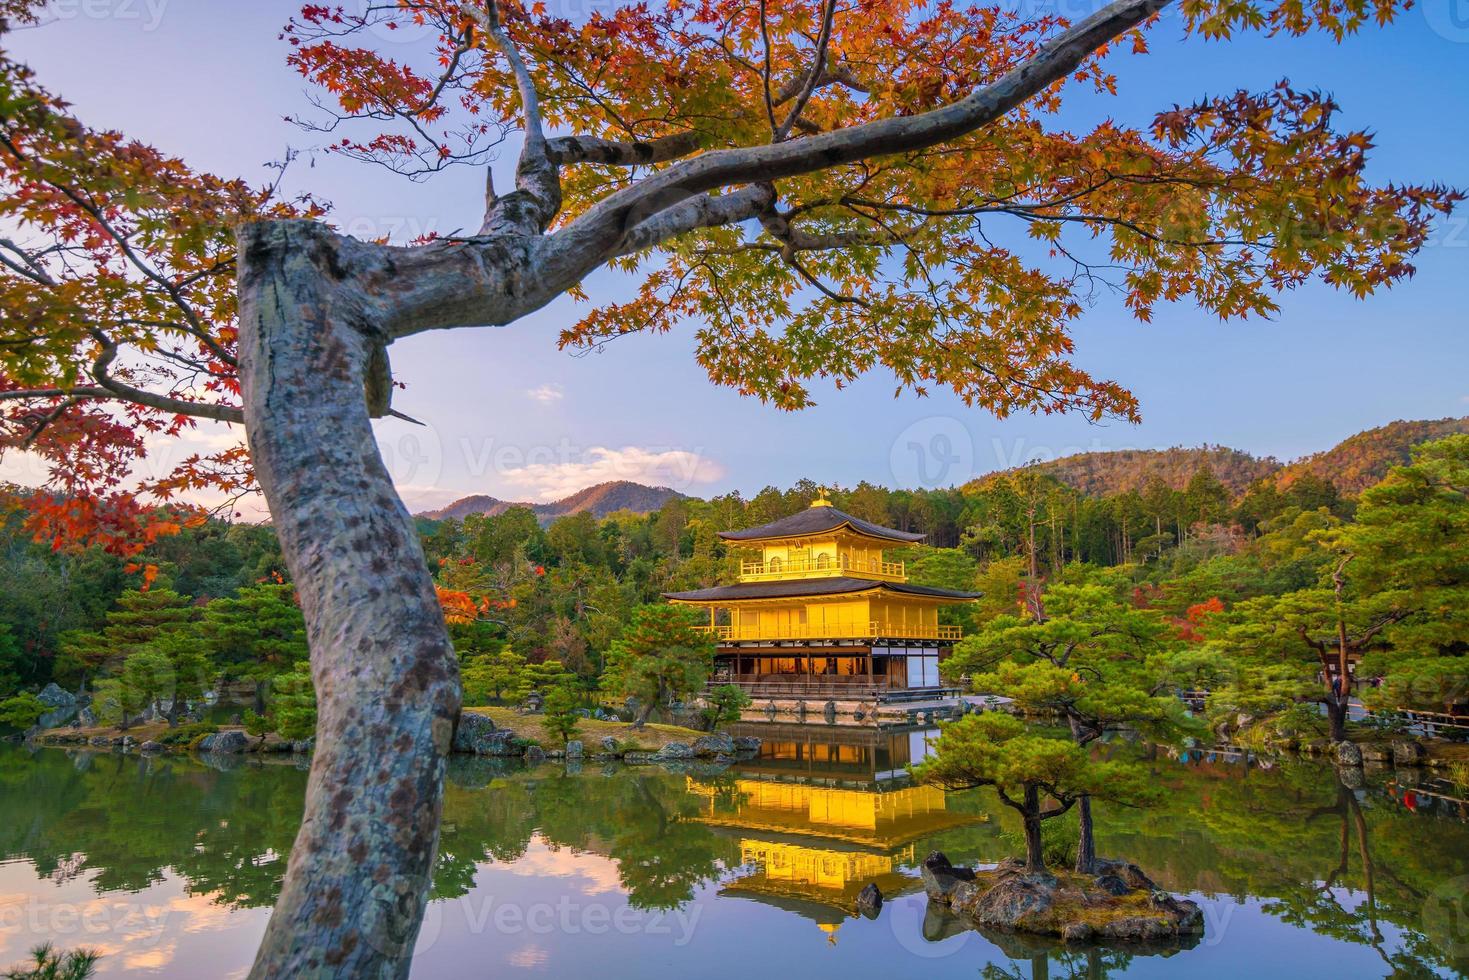 den gyllene paviljongen i kinkaku-ji-templet i kyoto, japan foto